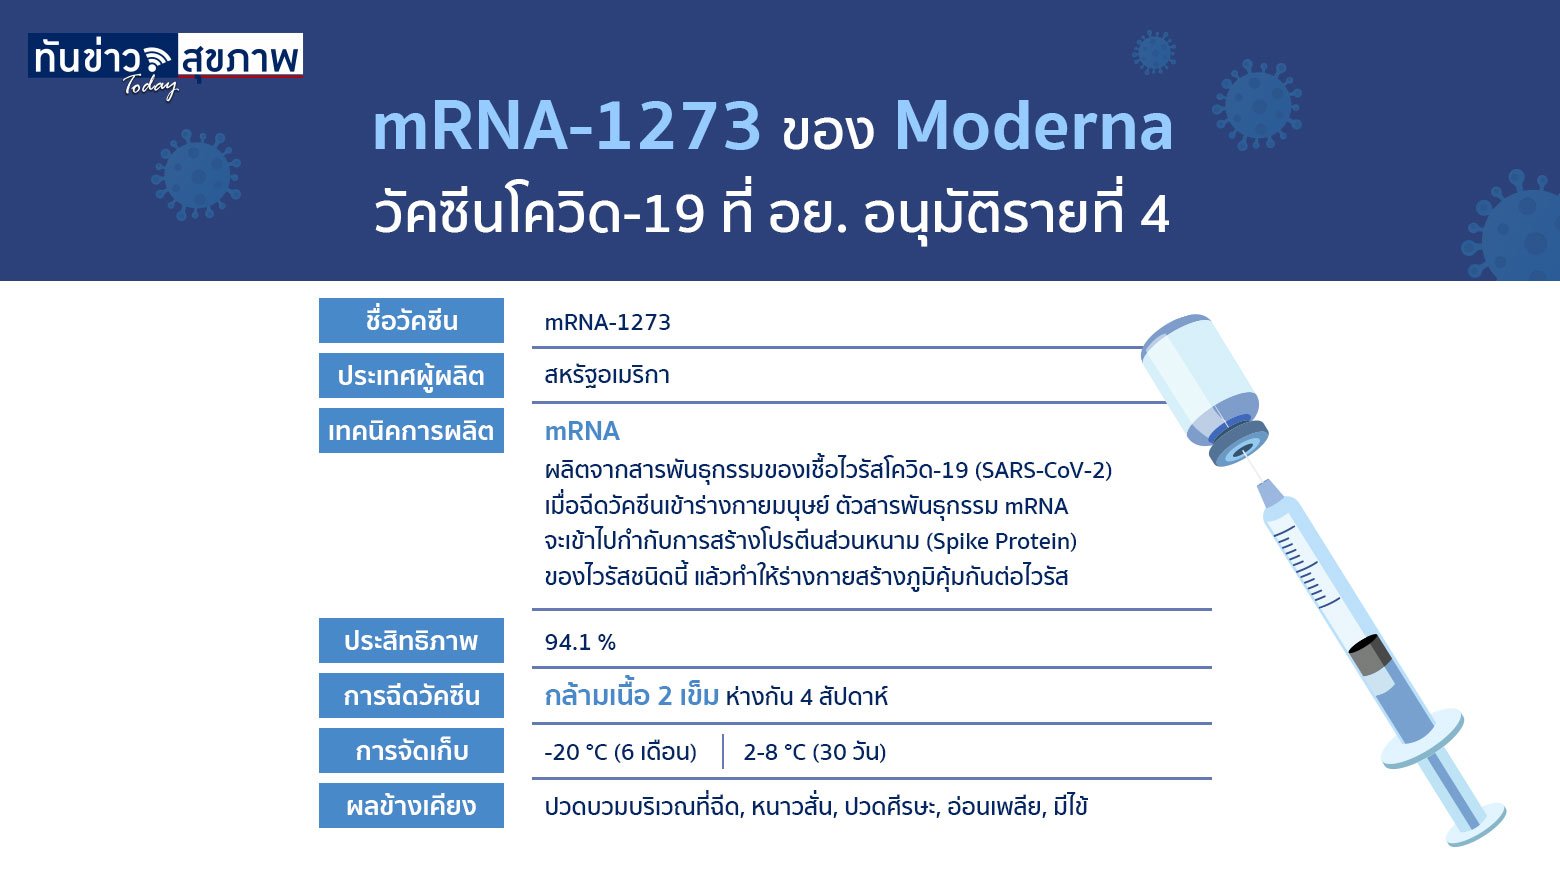 mRNA-1273 ของ Moderna วัคซีนโควิด-19 ที่ อย. อนุมัติรายที่ 4